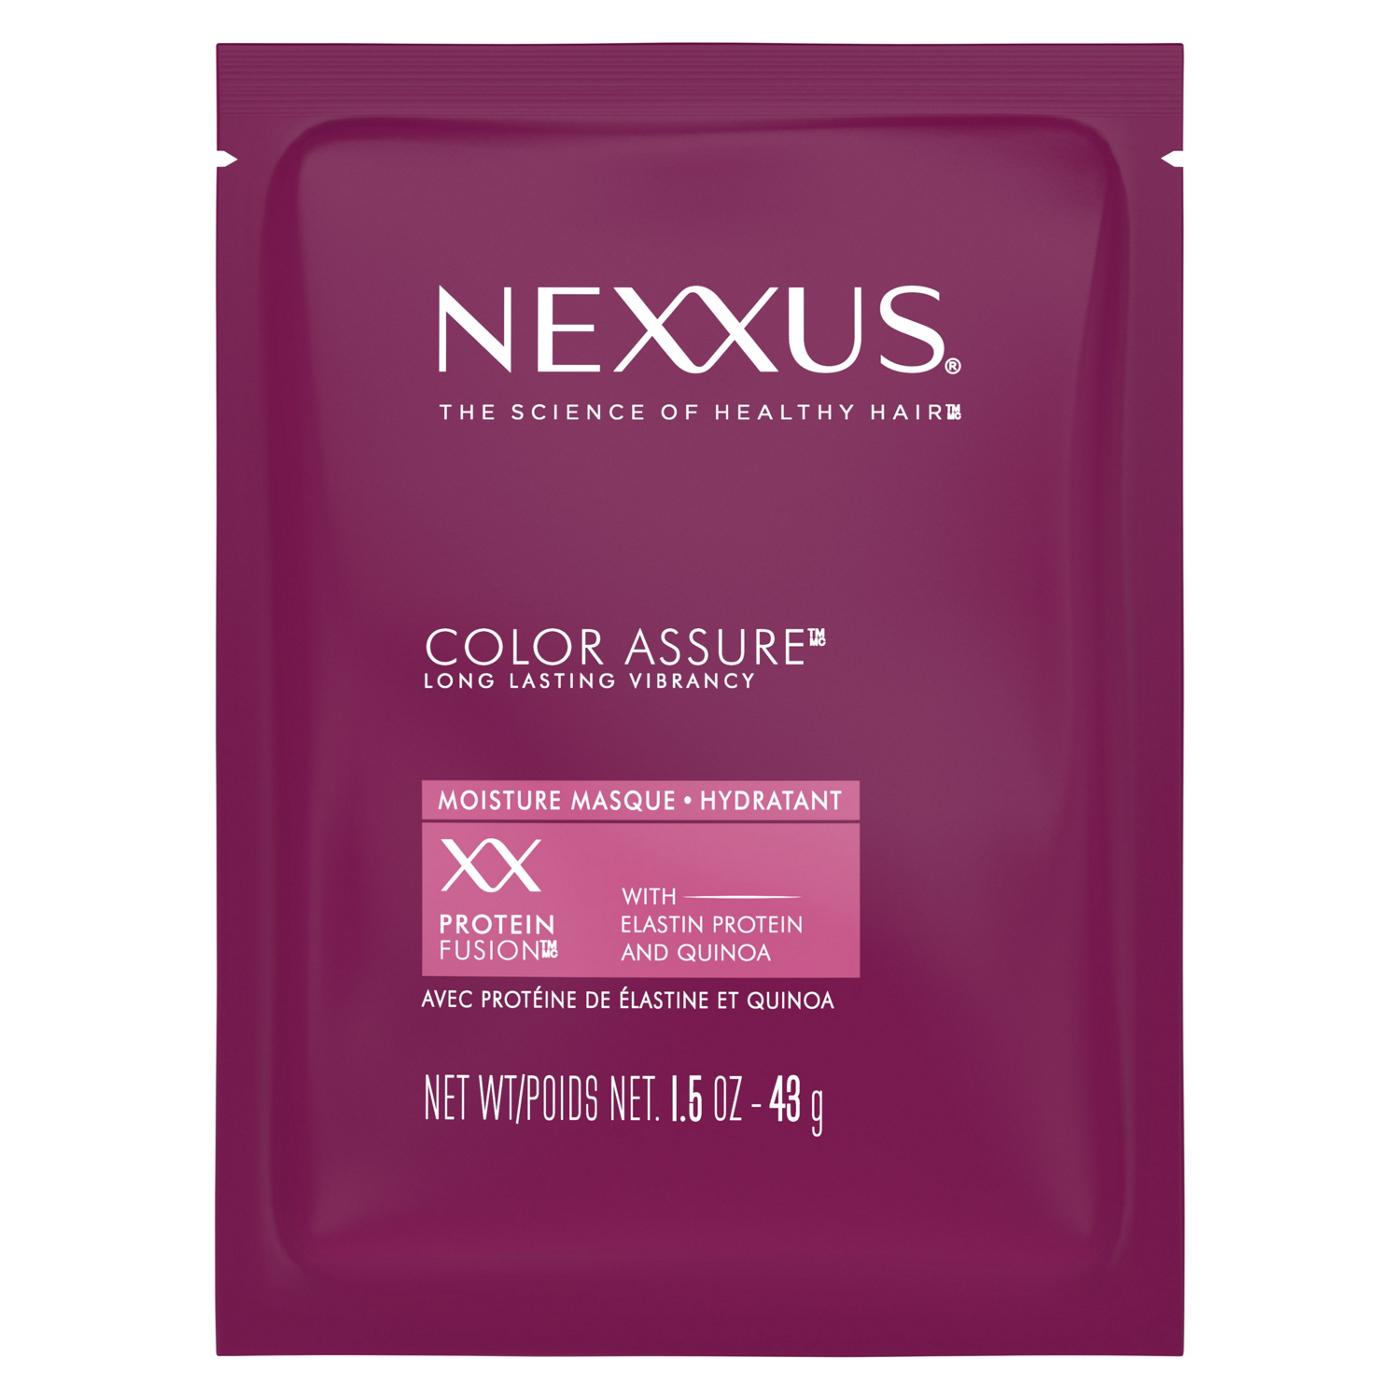 Nexxus Color Assure Hair Masque; image 1 of 4